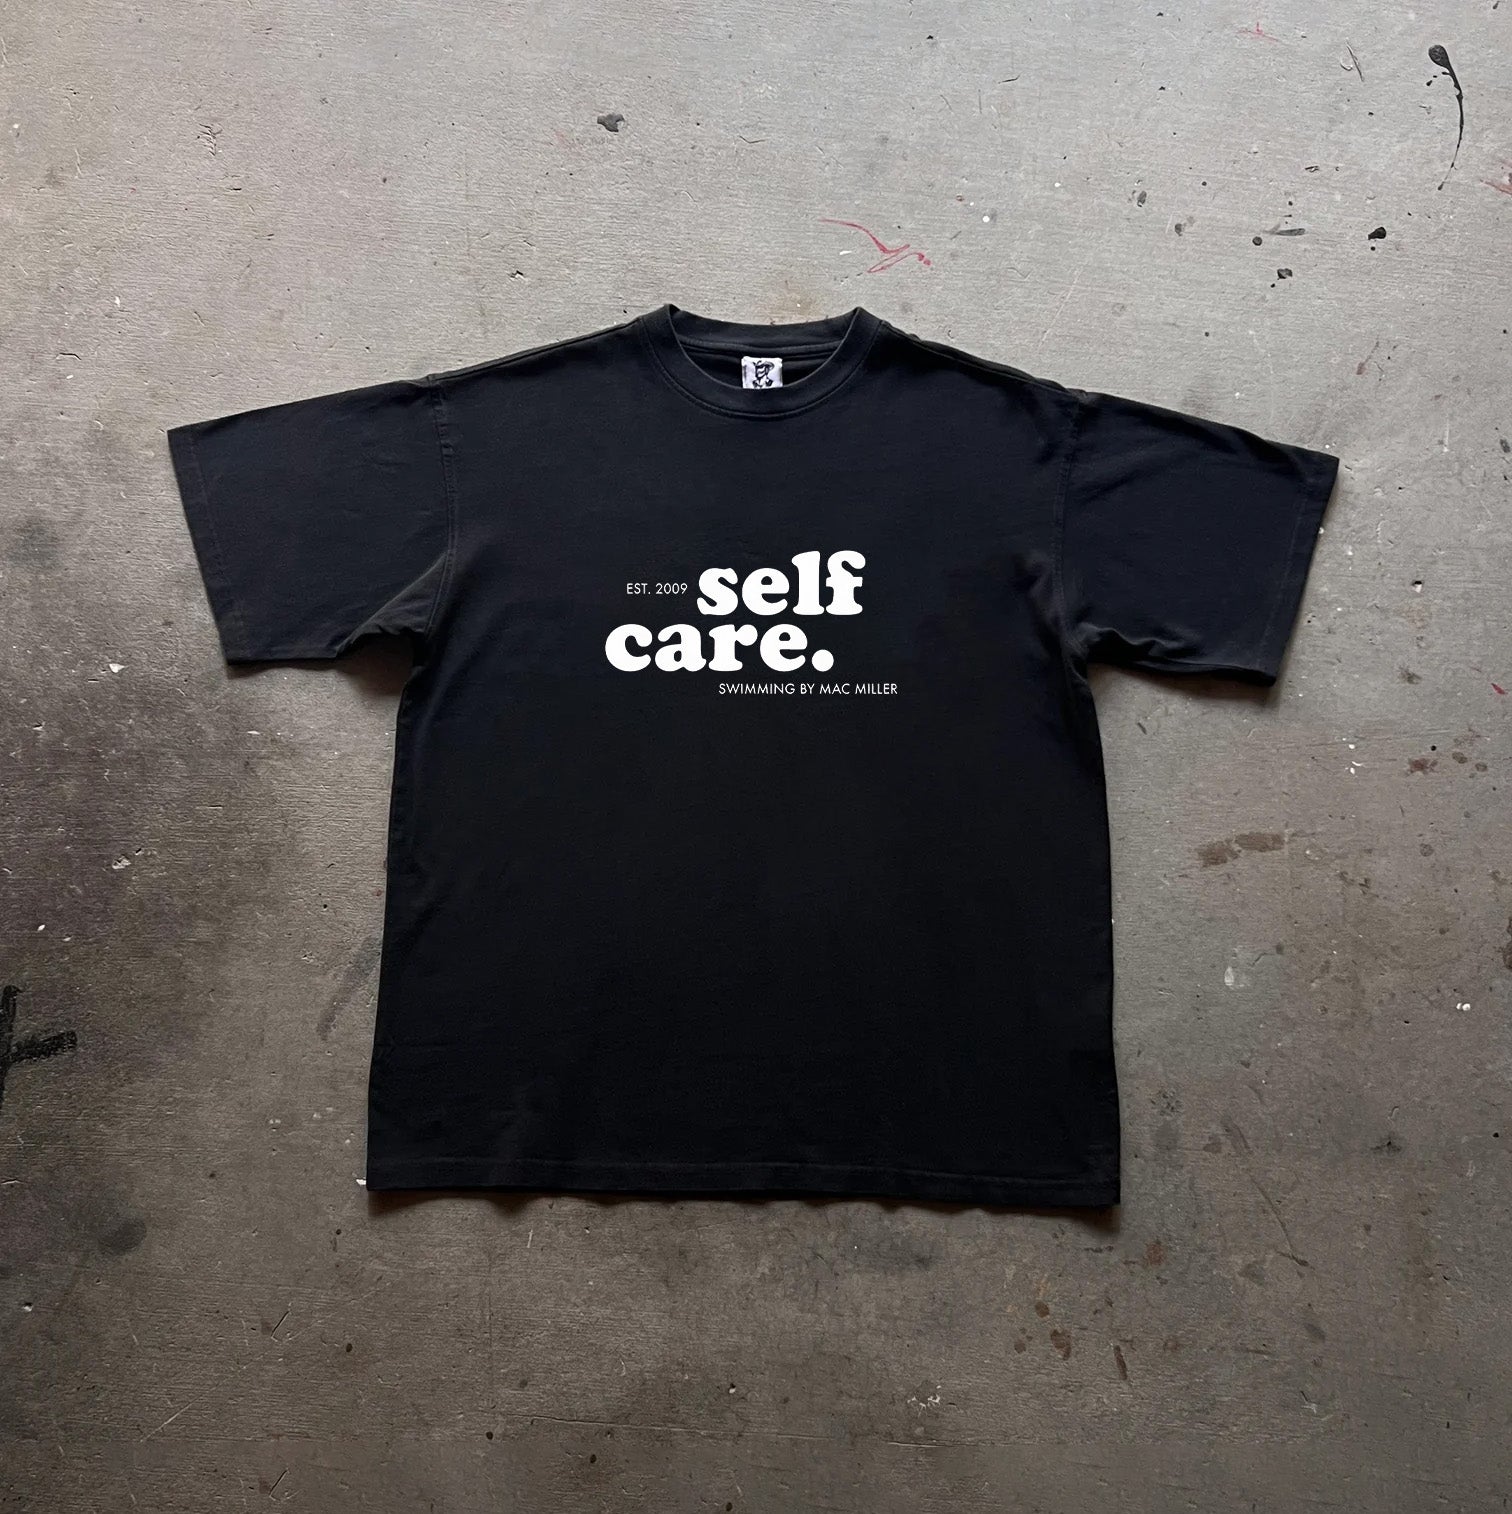 MAC MILLER "Self care" Oversized T-shirt